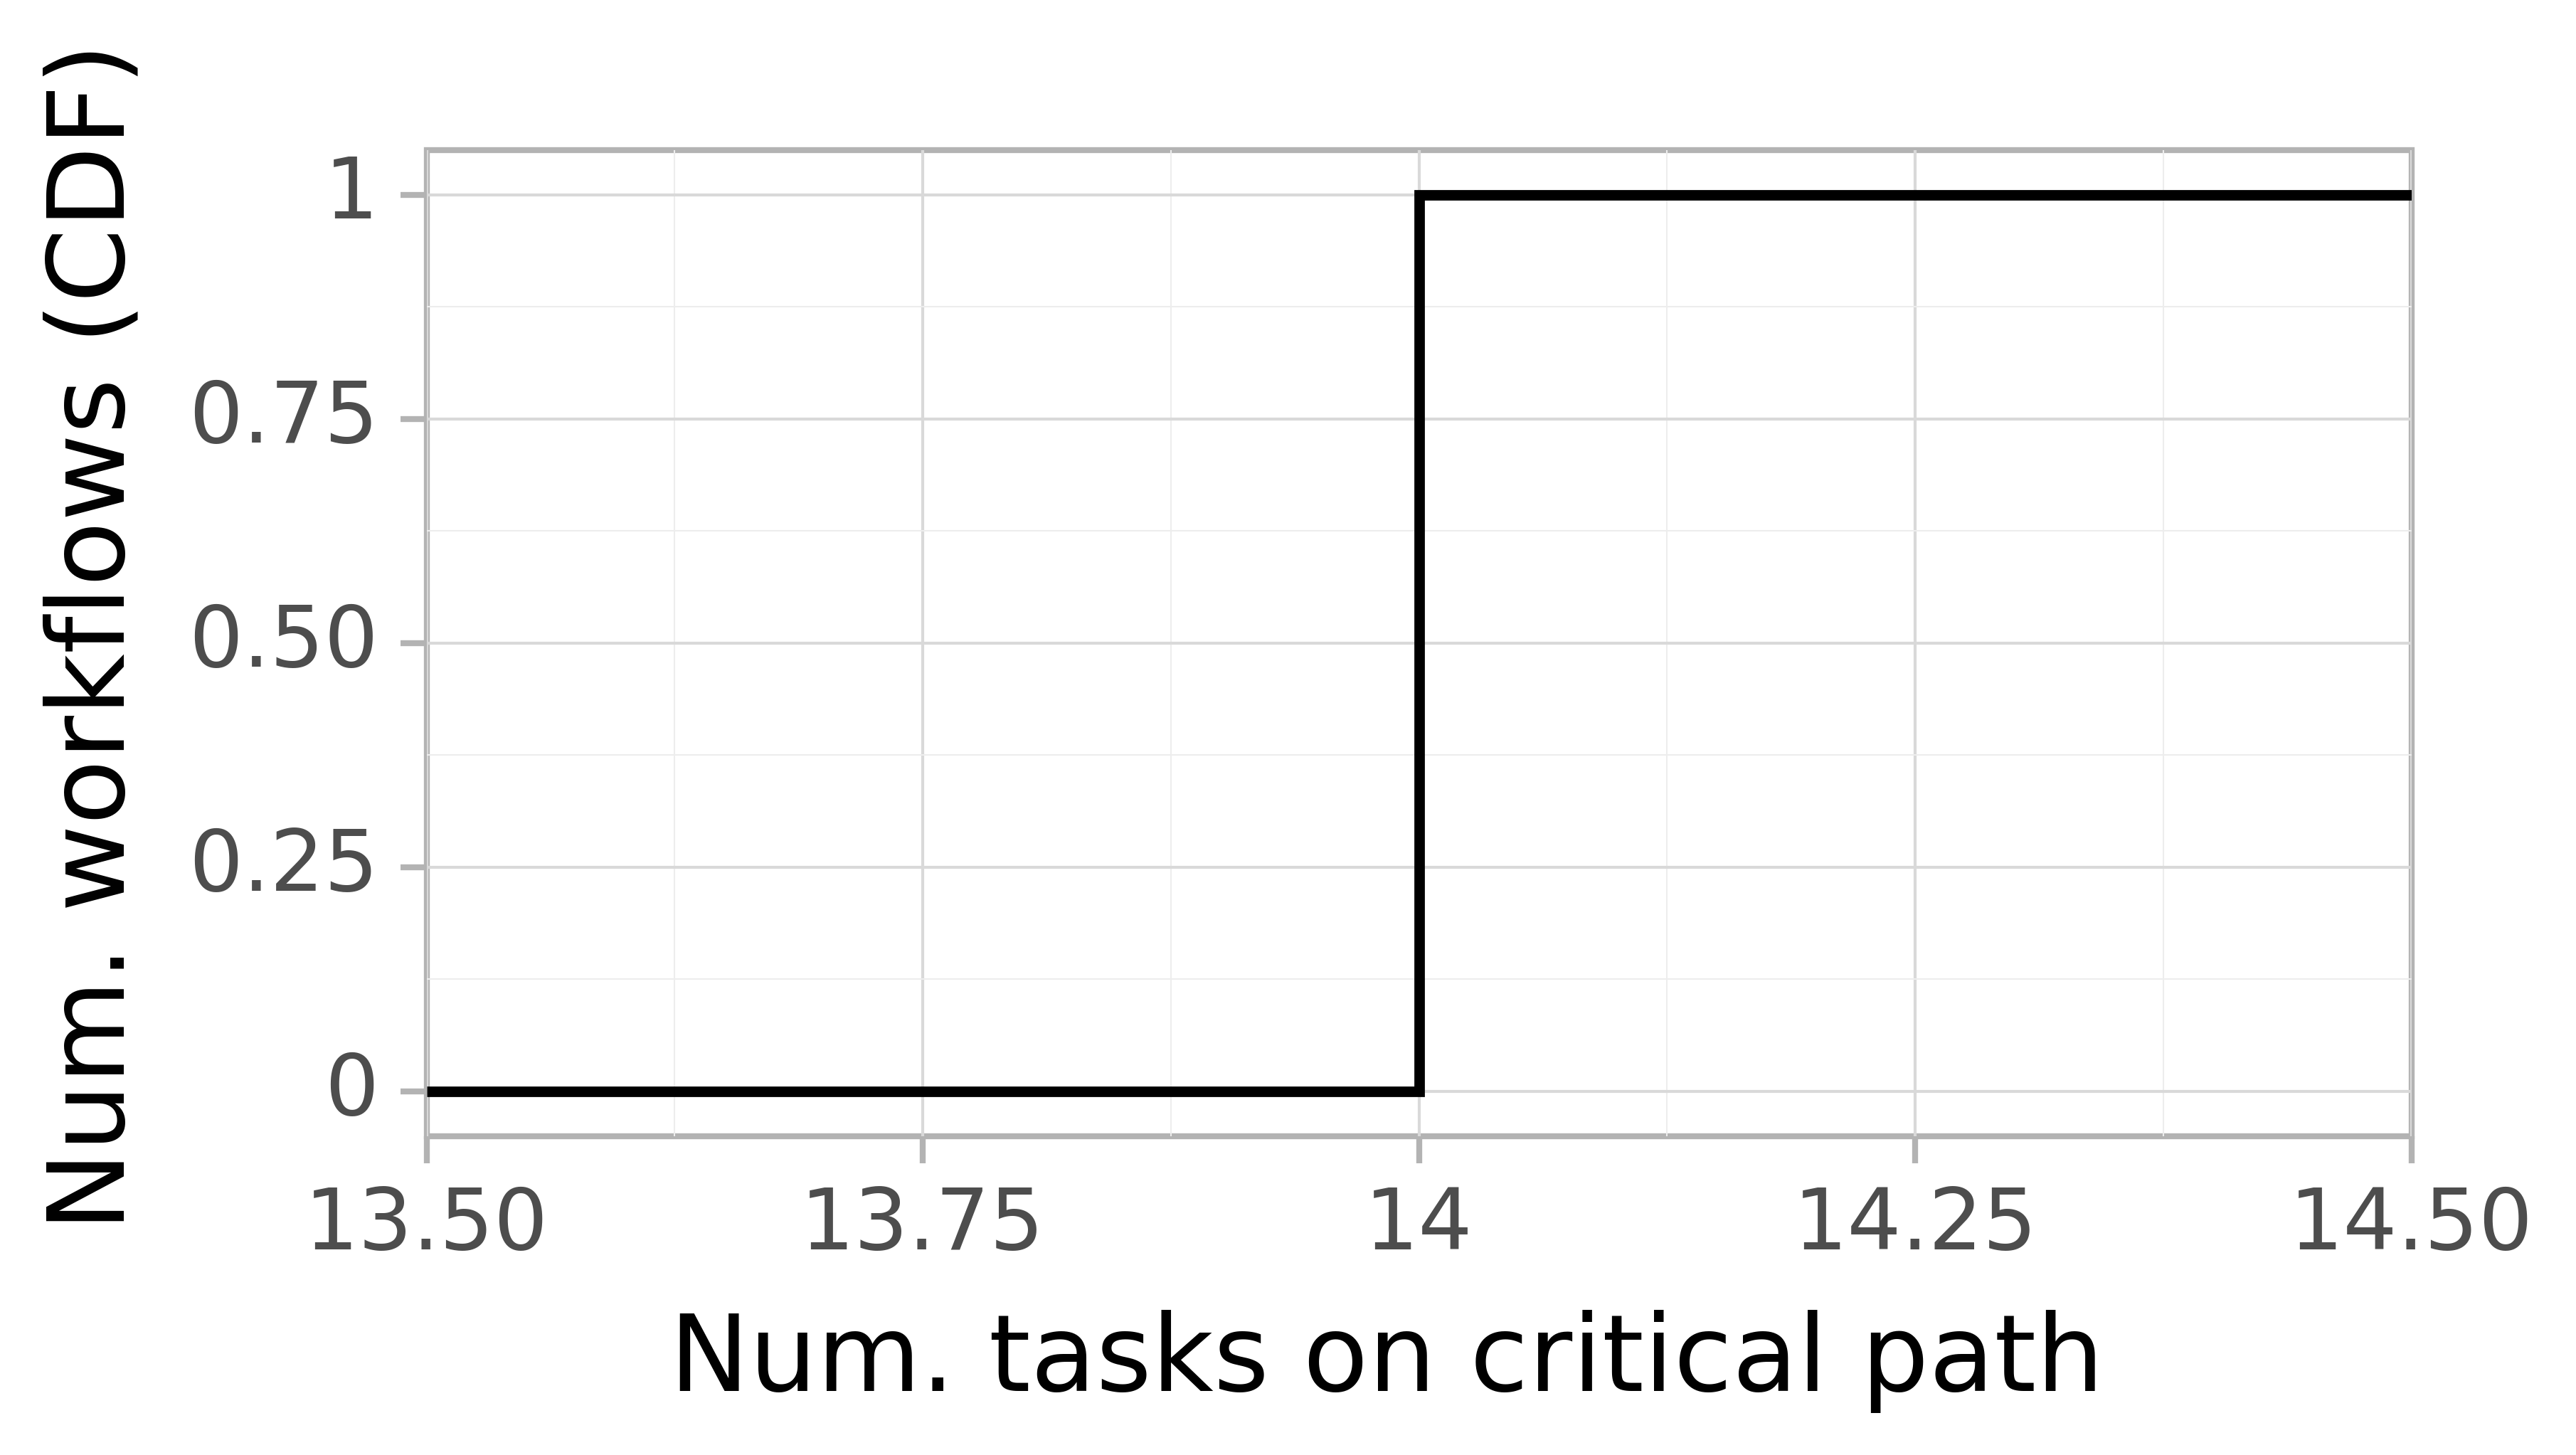 Job critical path task count graph for the workflowhub_epigenomics_dataset-taq_chameleon-cloud_schema-0-2_epigenomics-taq-100000-cc-run002 trace.